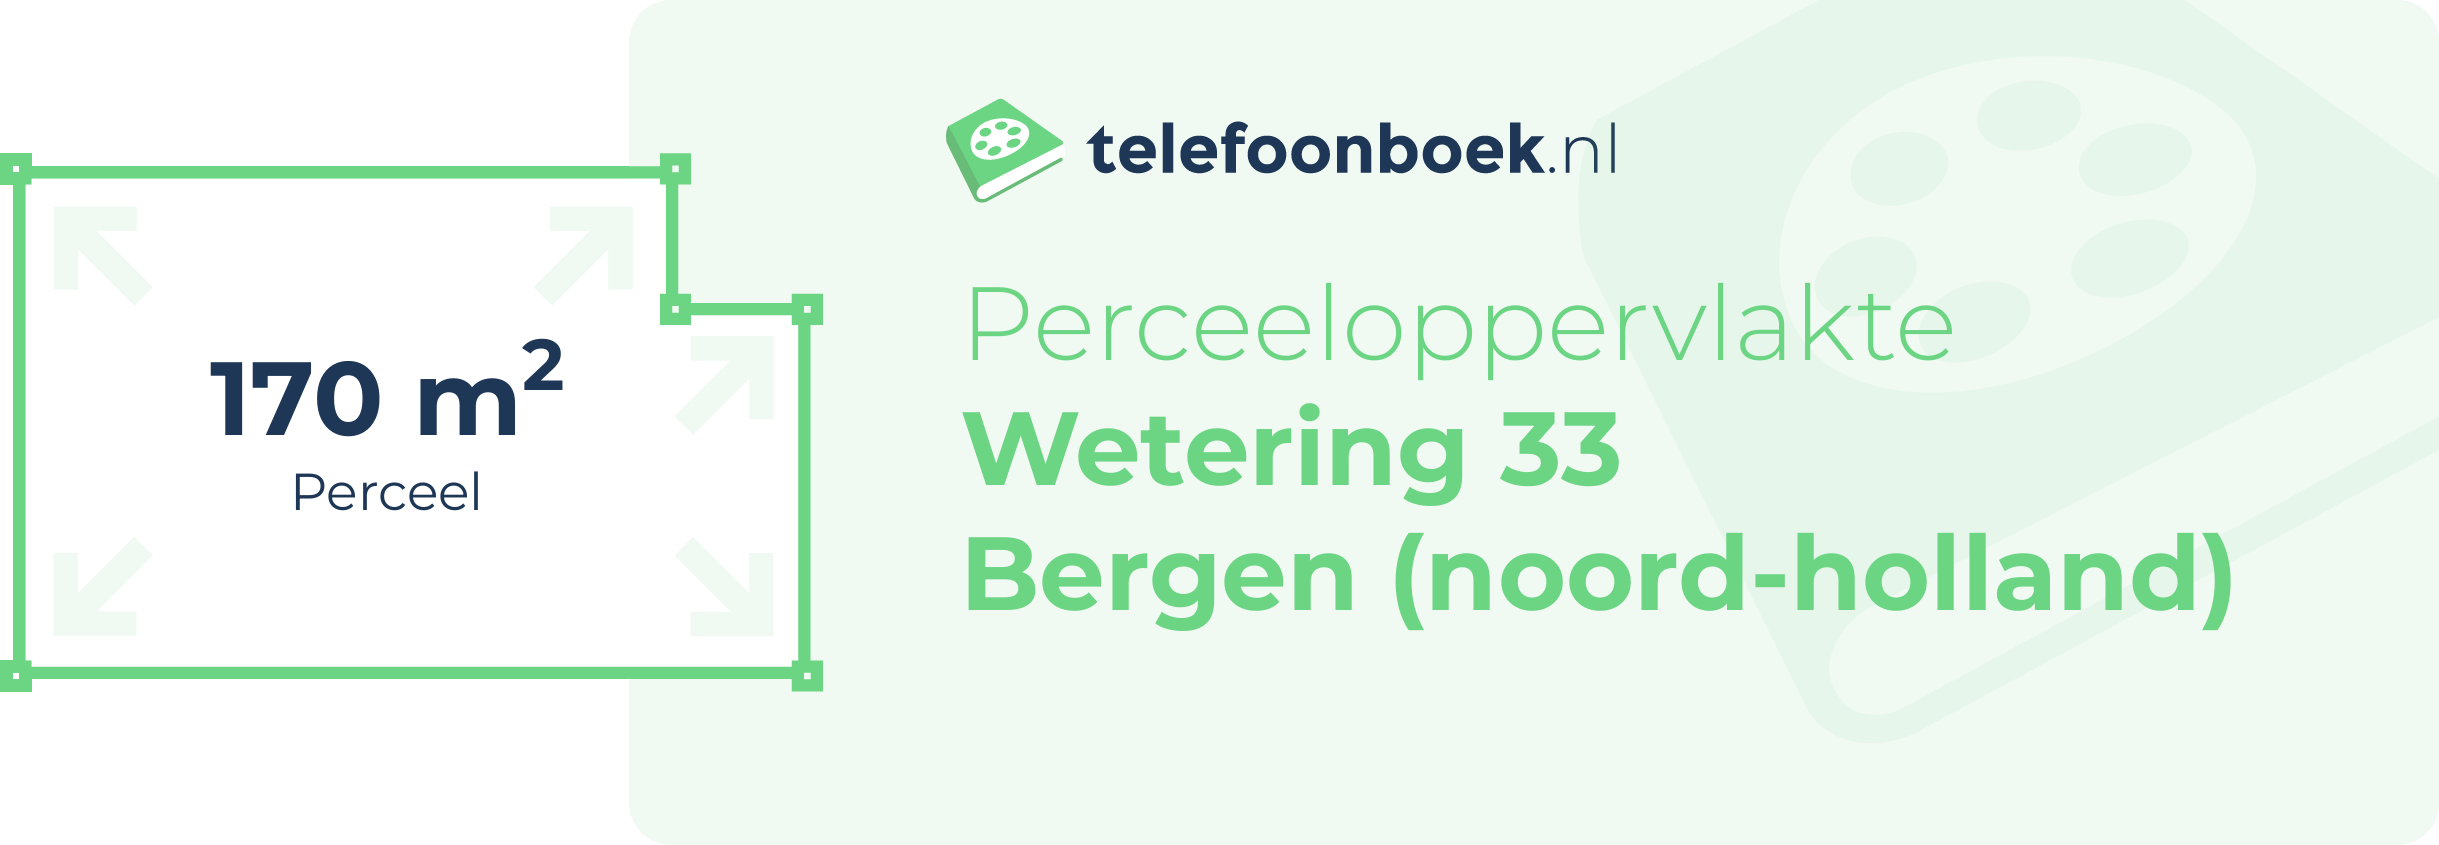 Perceeloppervlakte Wetering 33 Bergen (Noord-Holland)